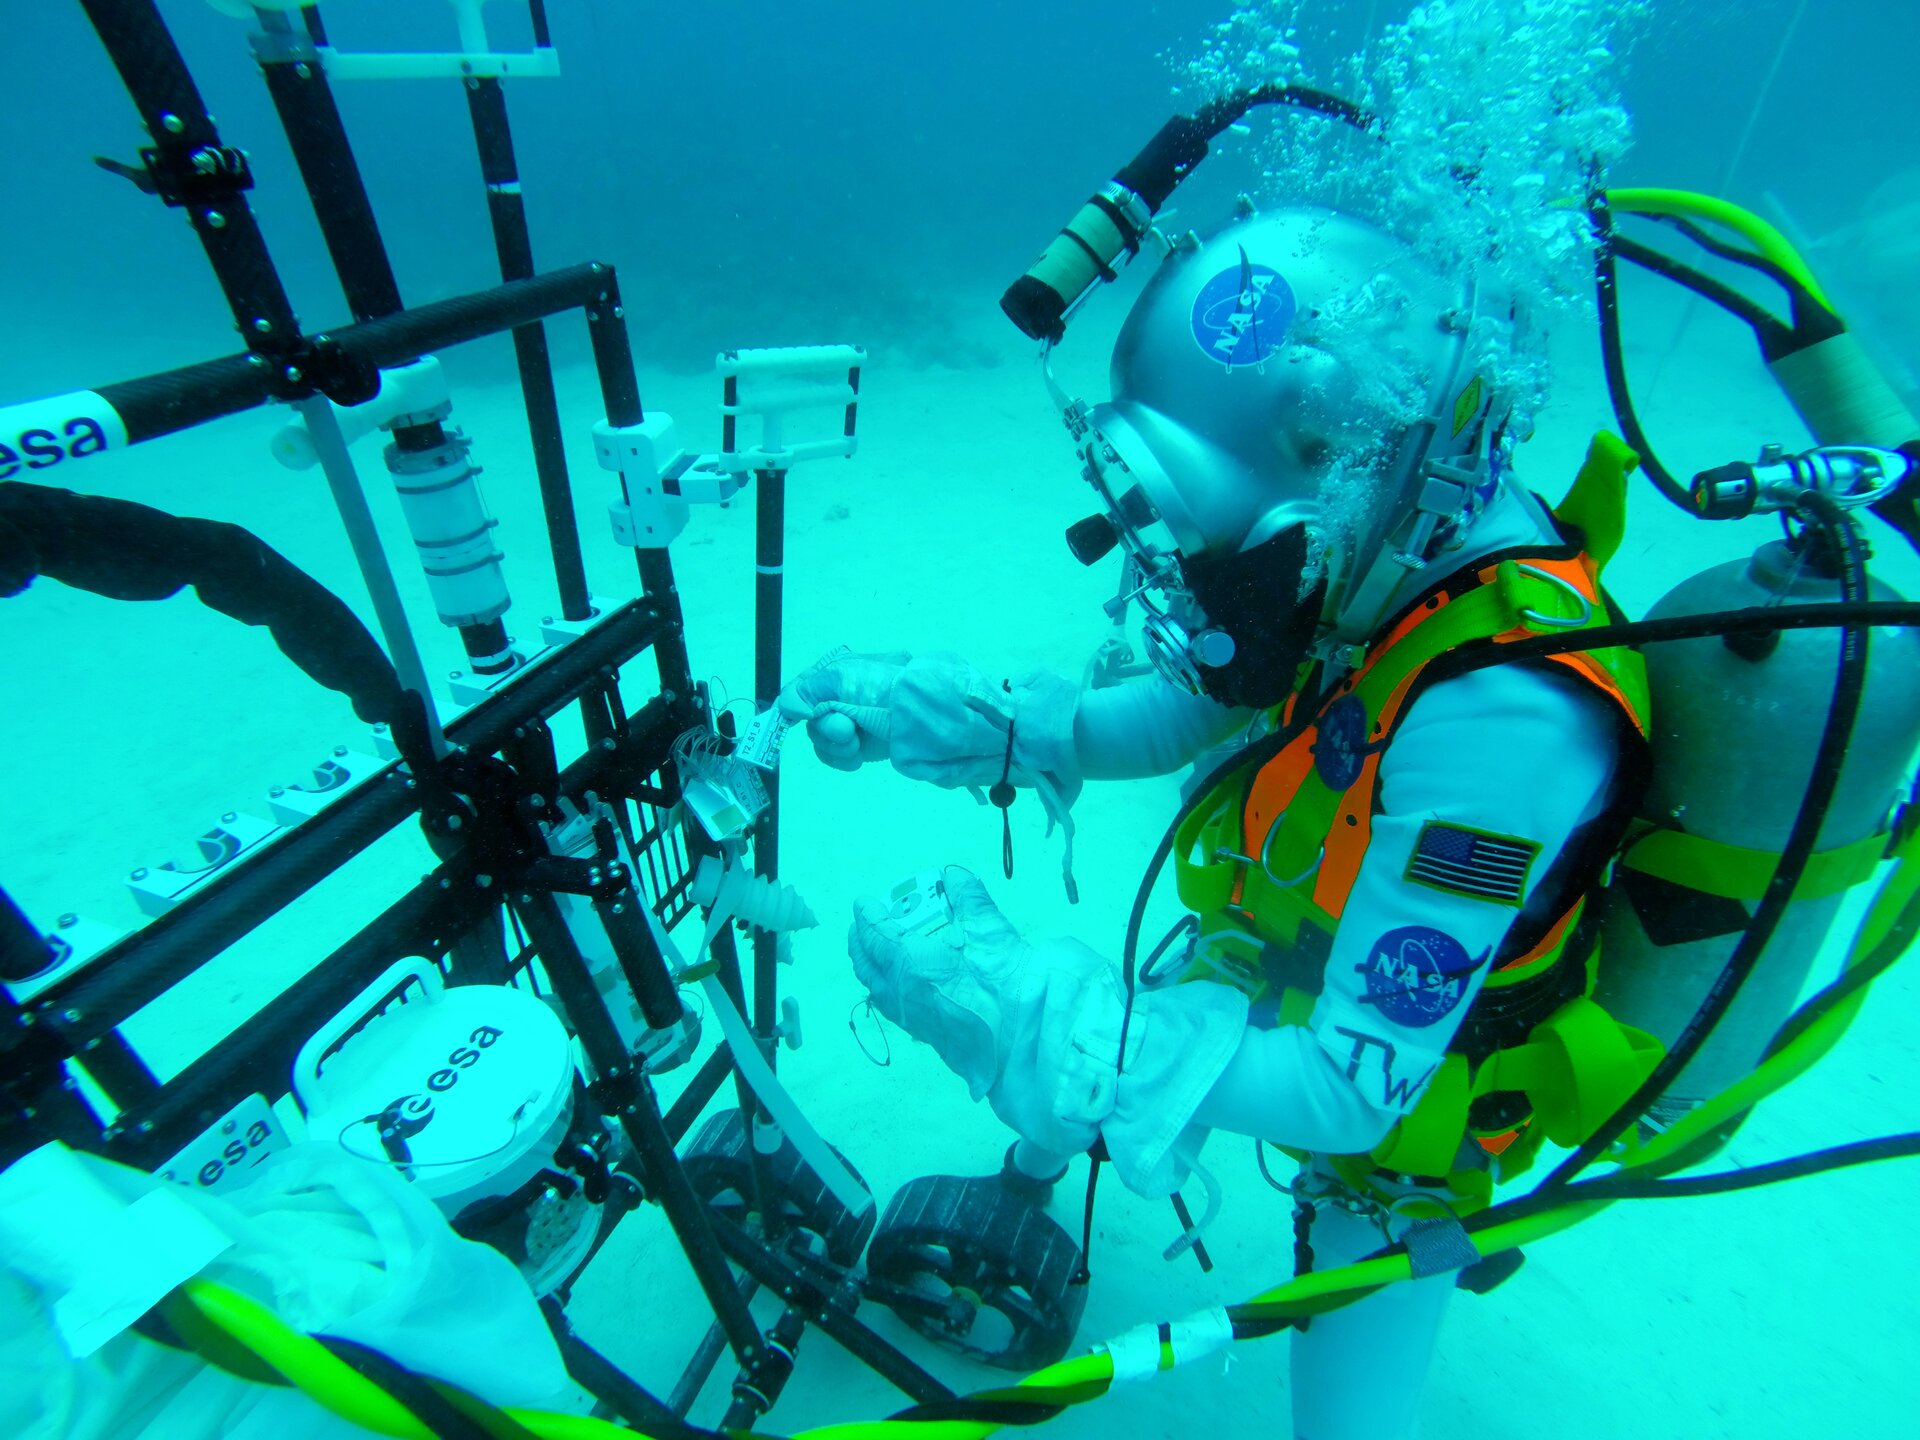 Testing prototypes for geological sampling tools underwater